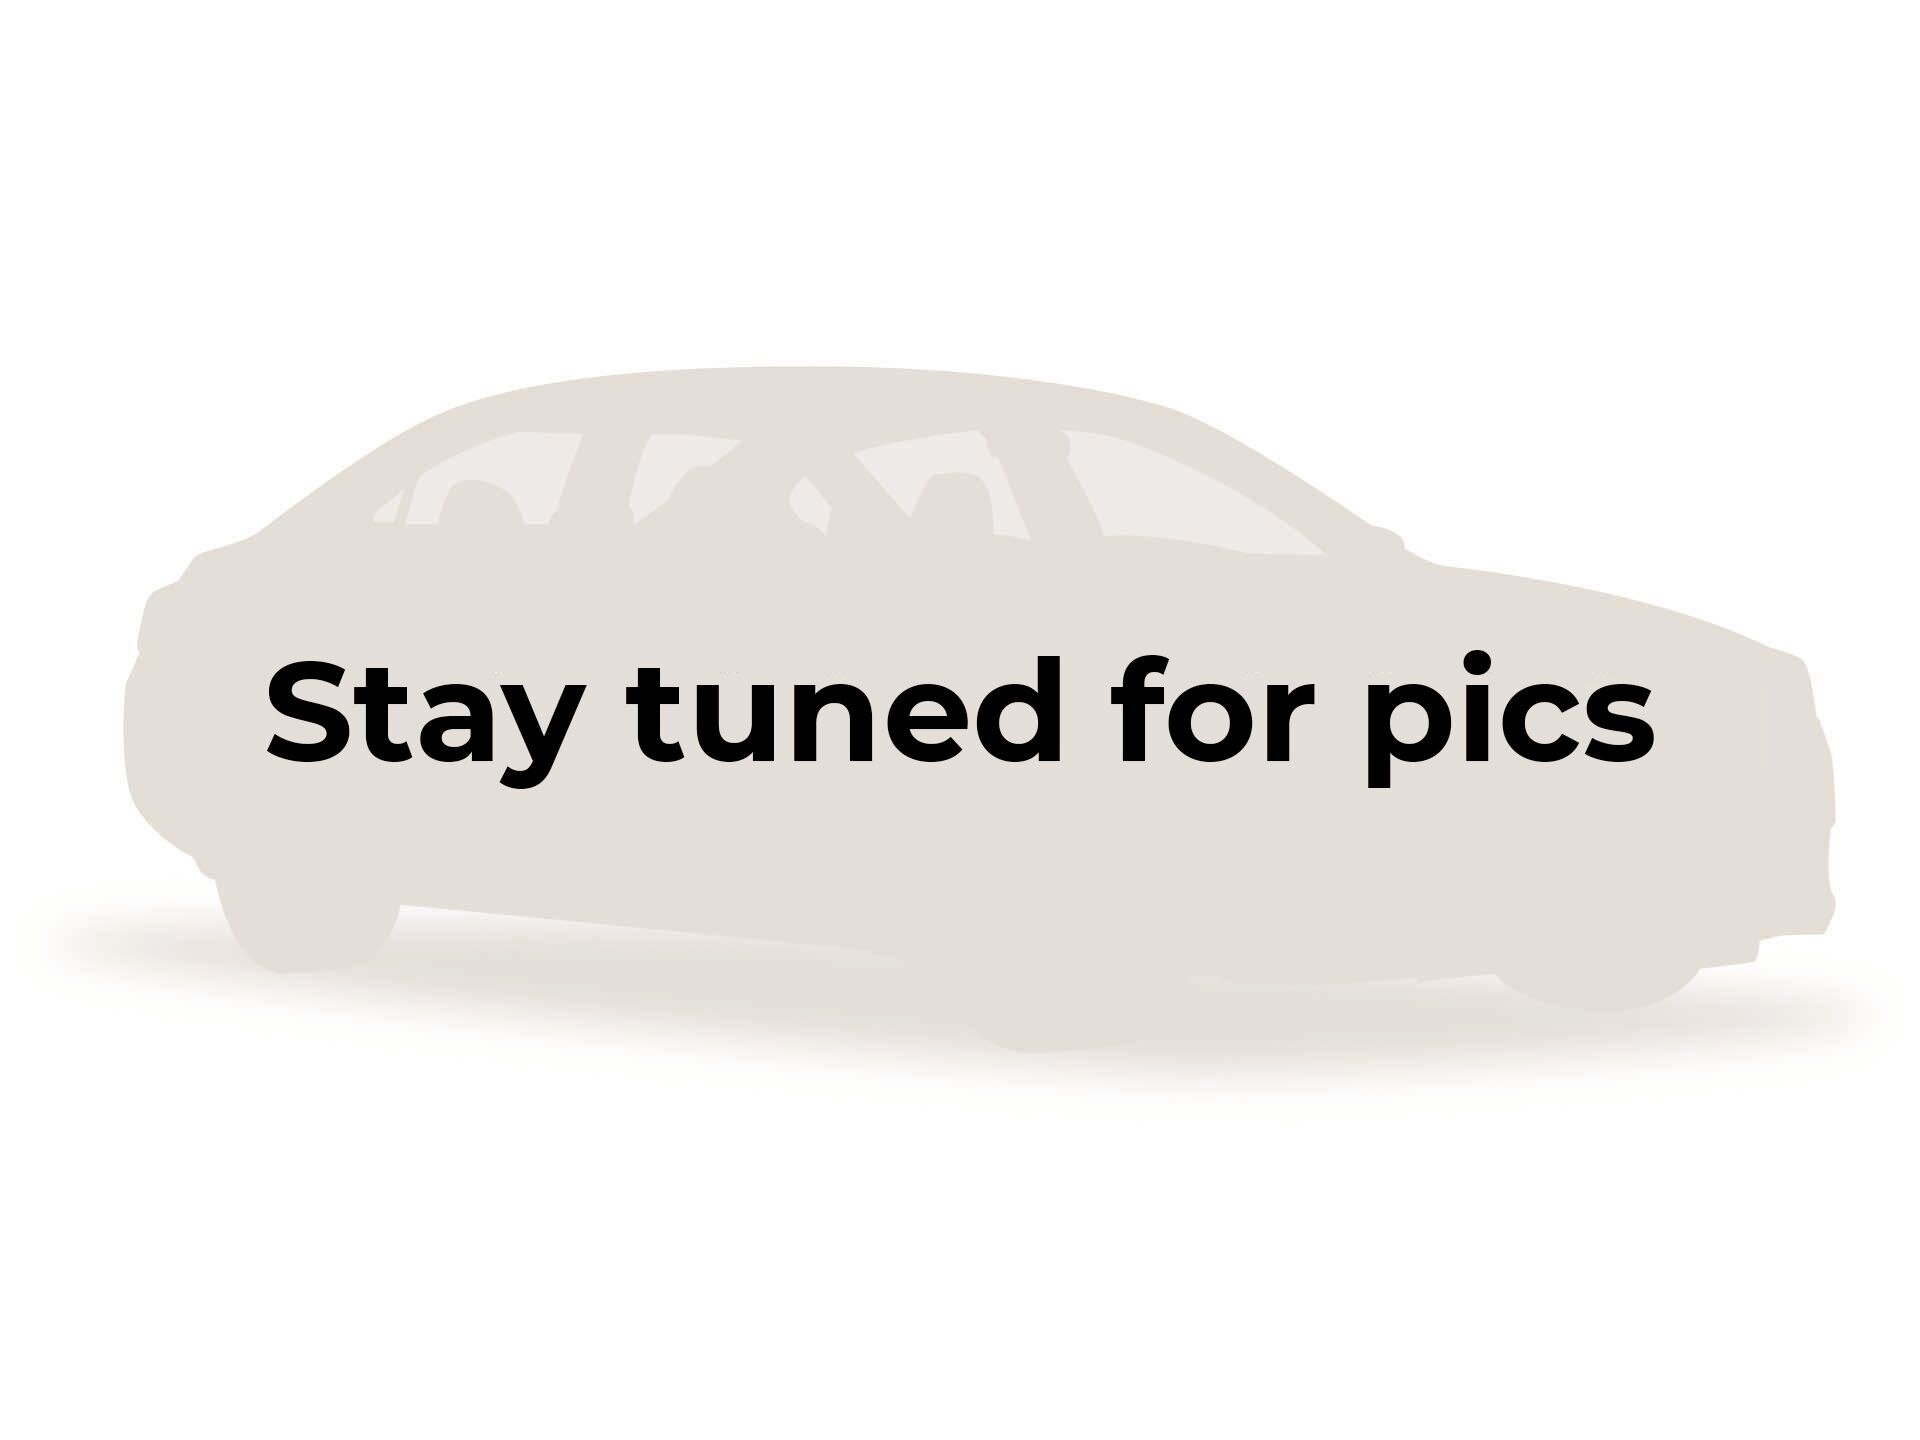 19 Mazda Cx 5 Reviews Photos And More Carmax